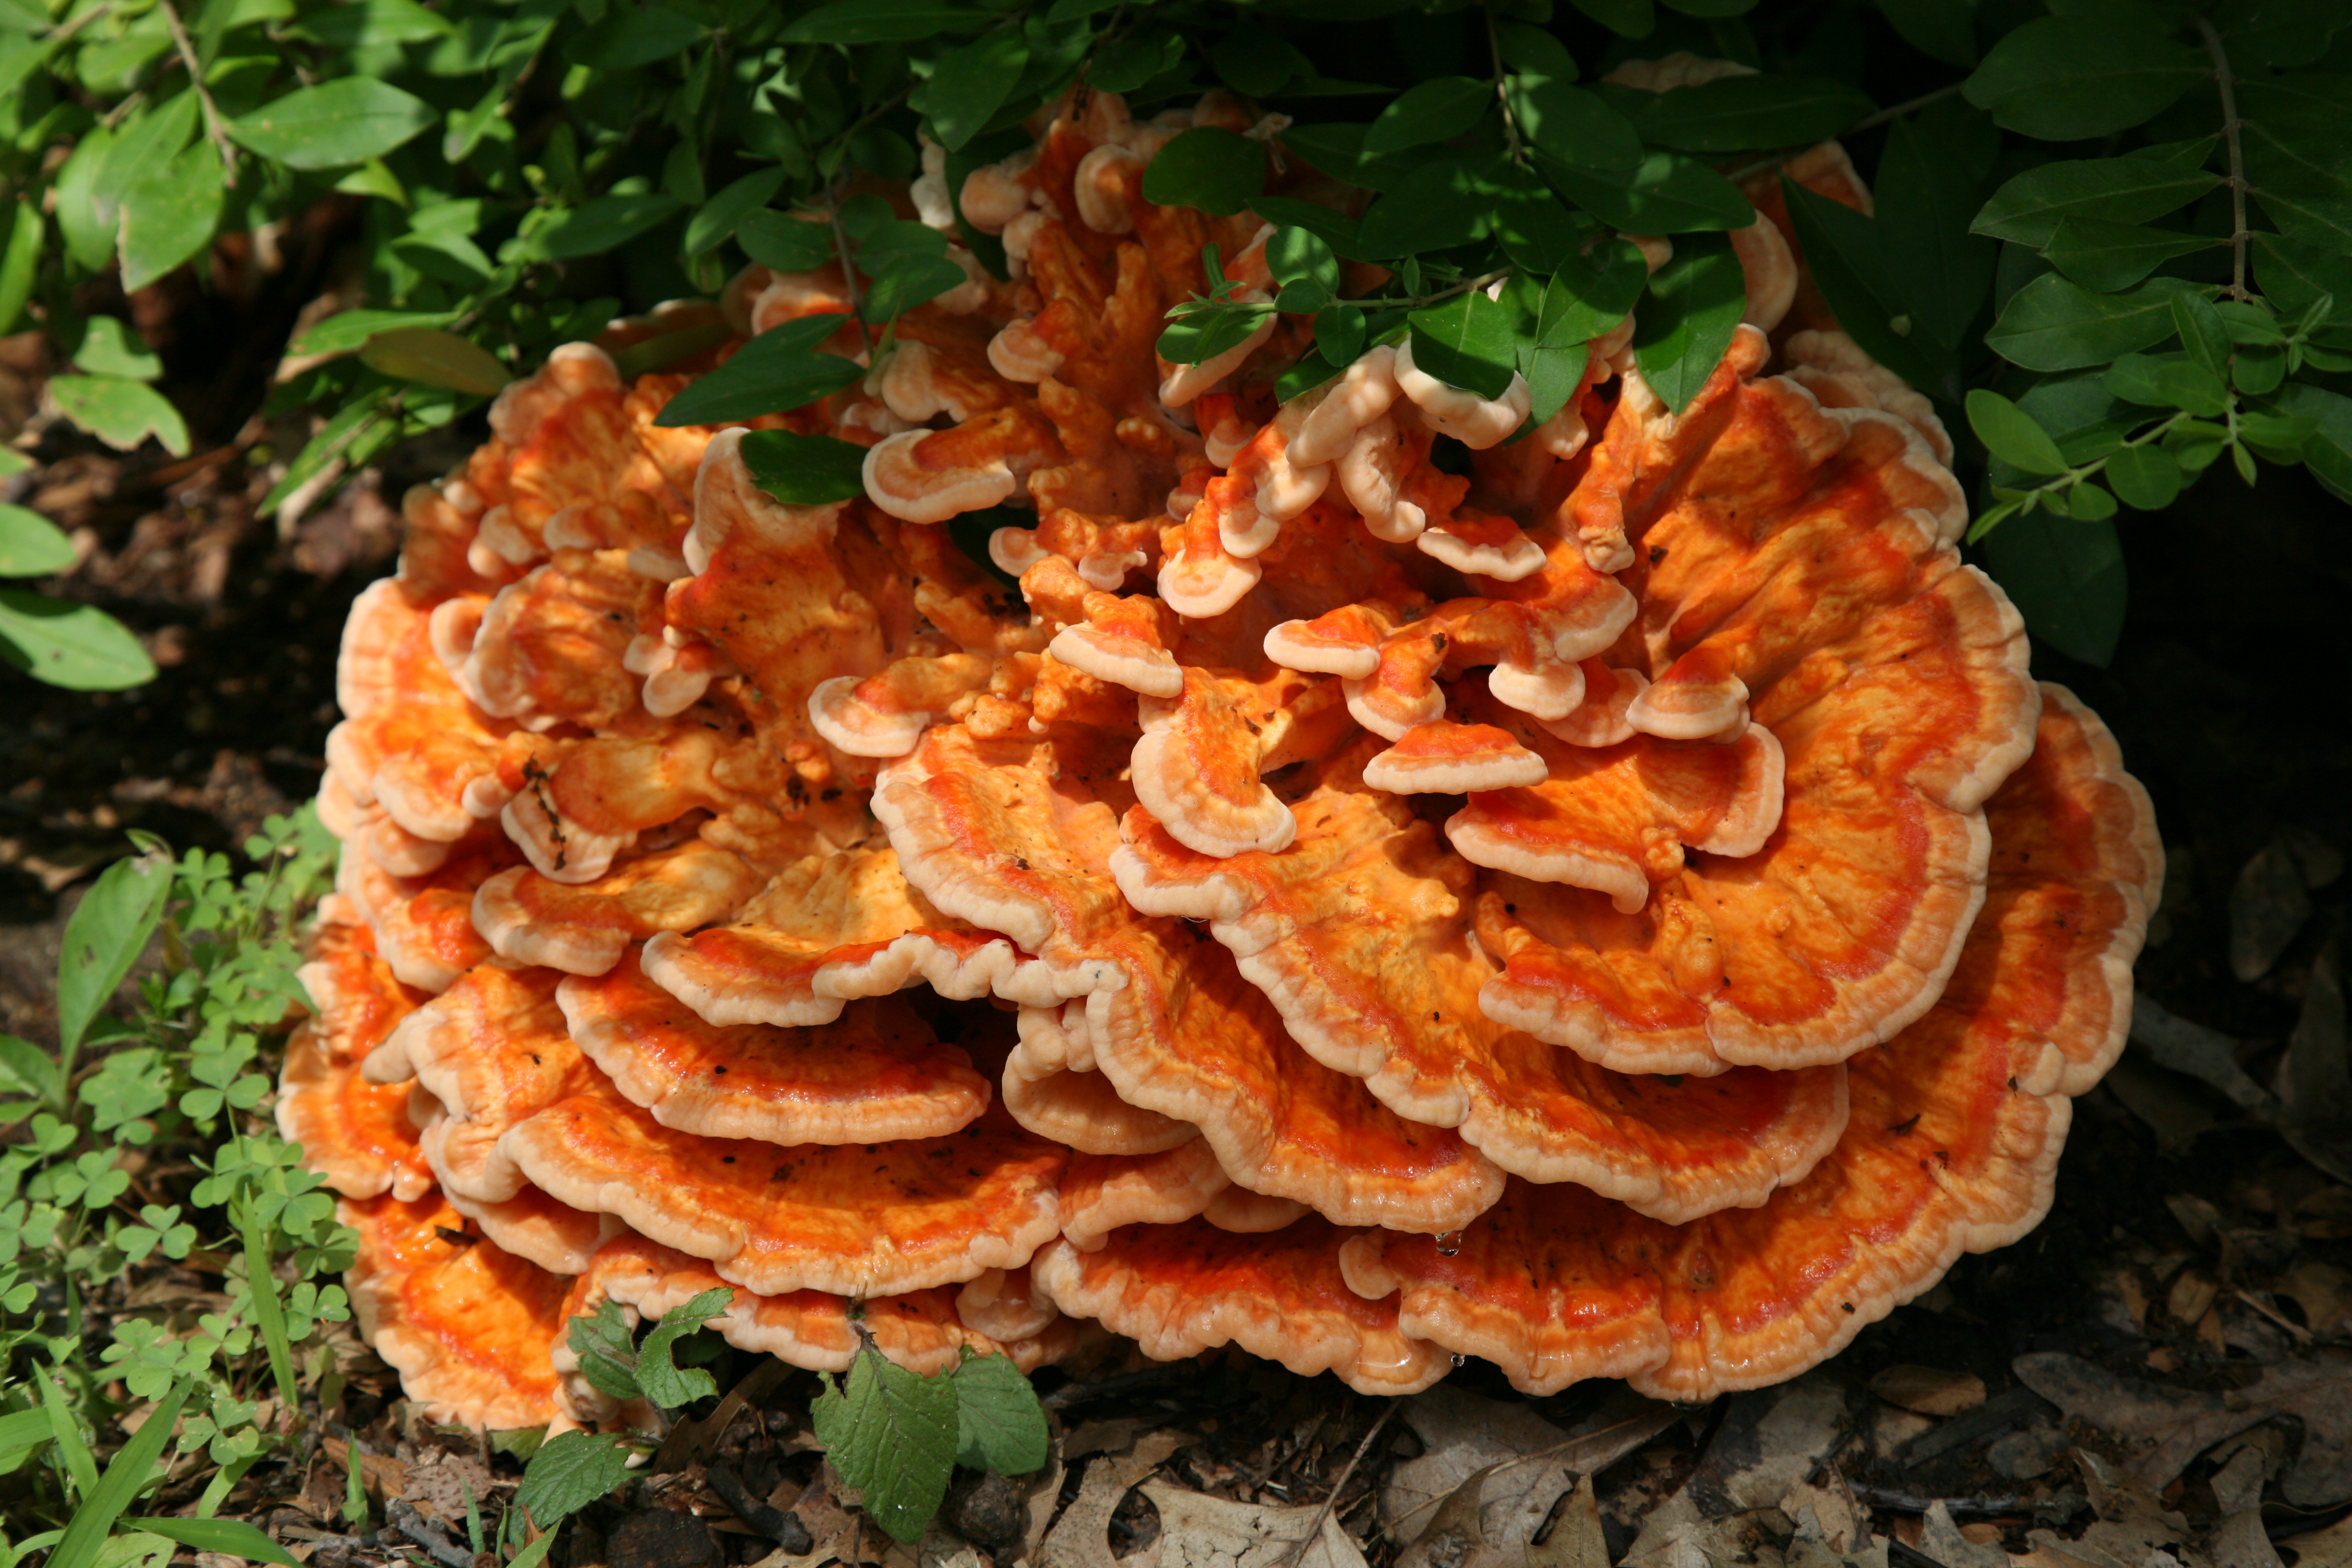 File:Orange mushroom.jpg - Wikimedia Commons